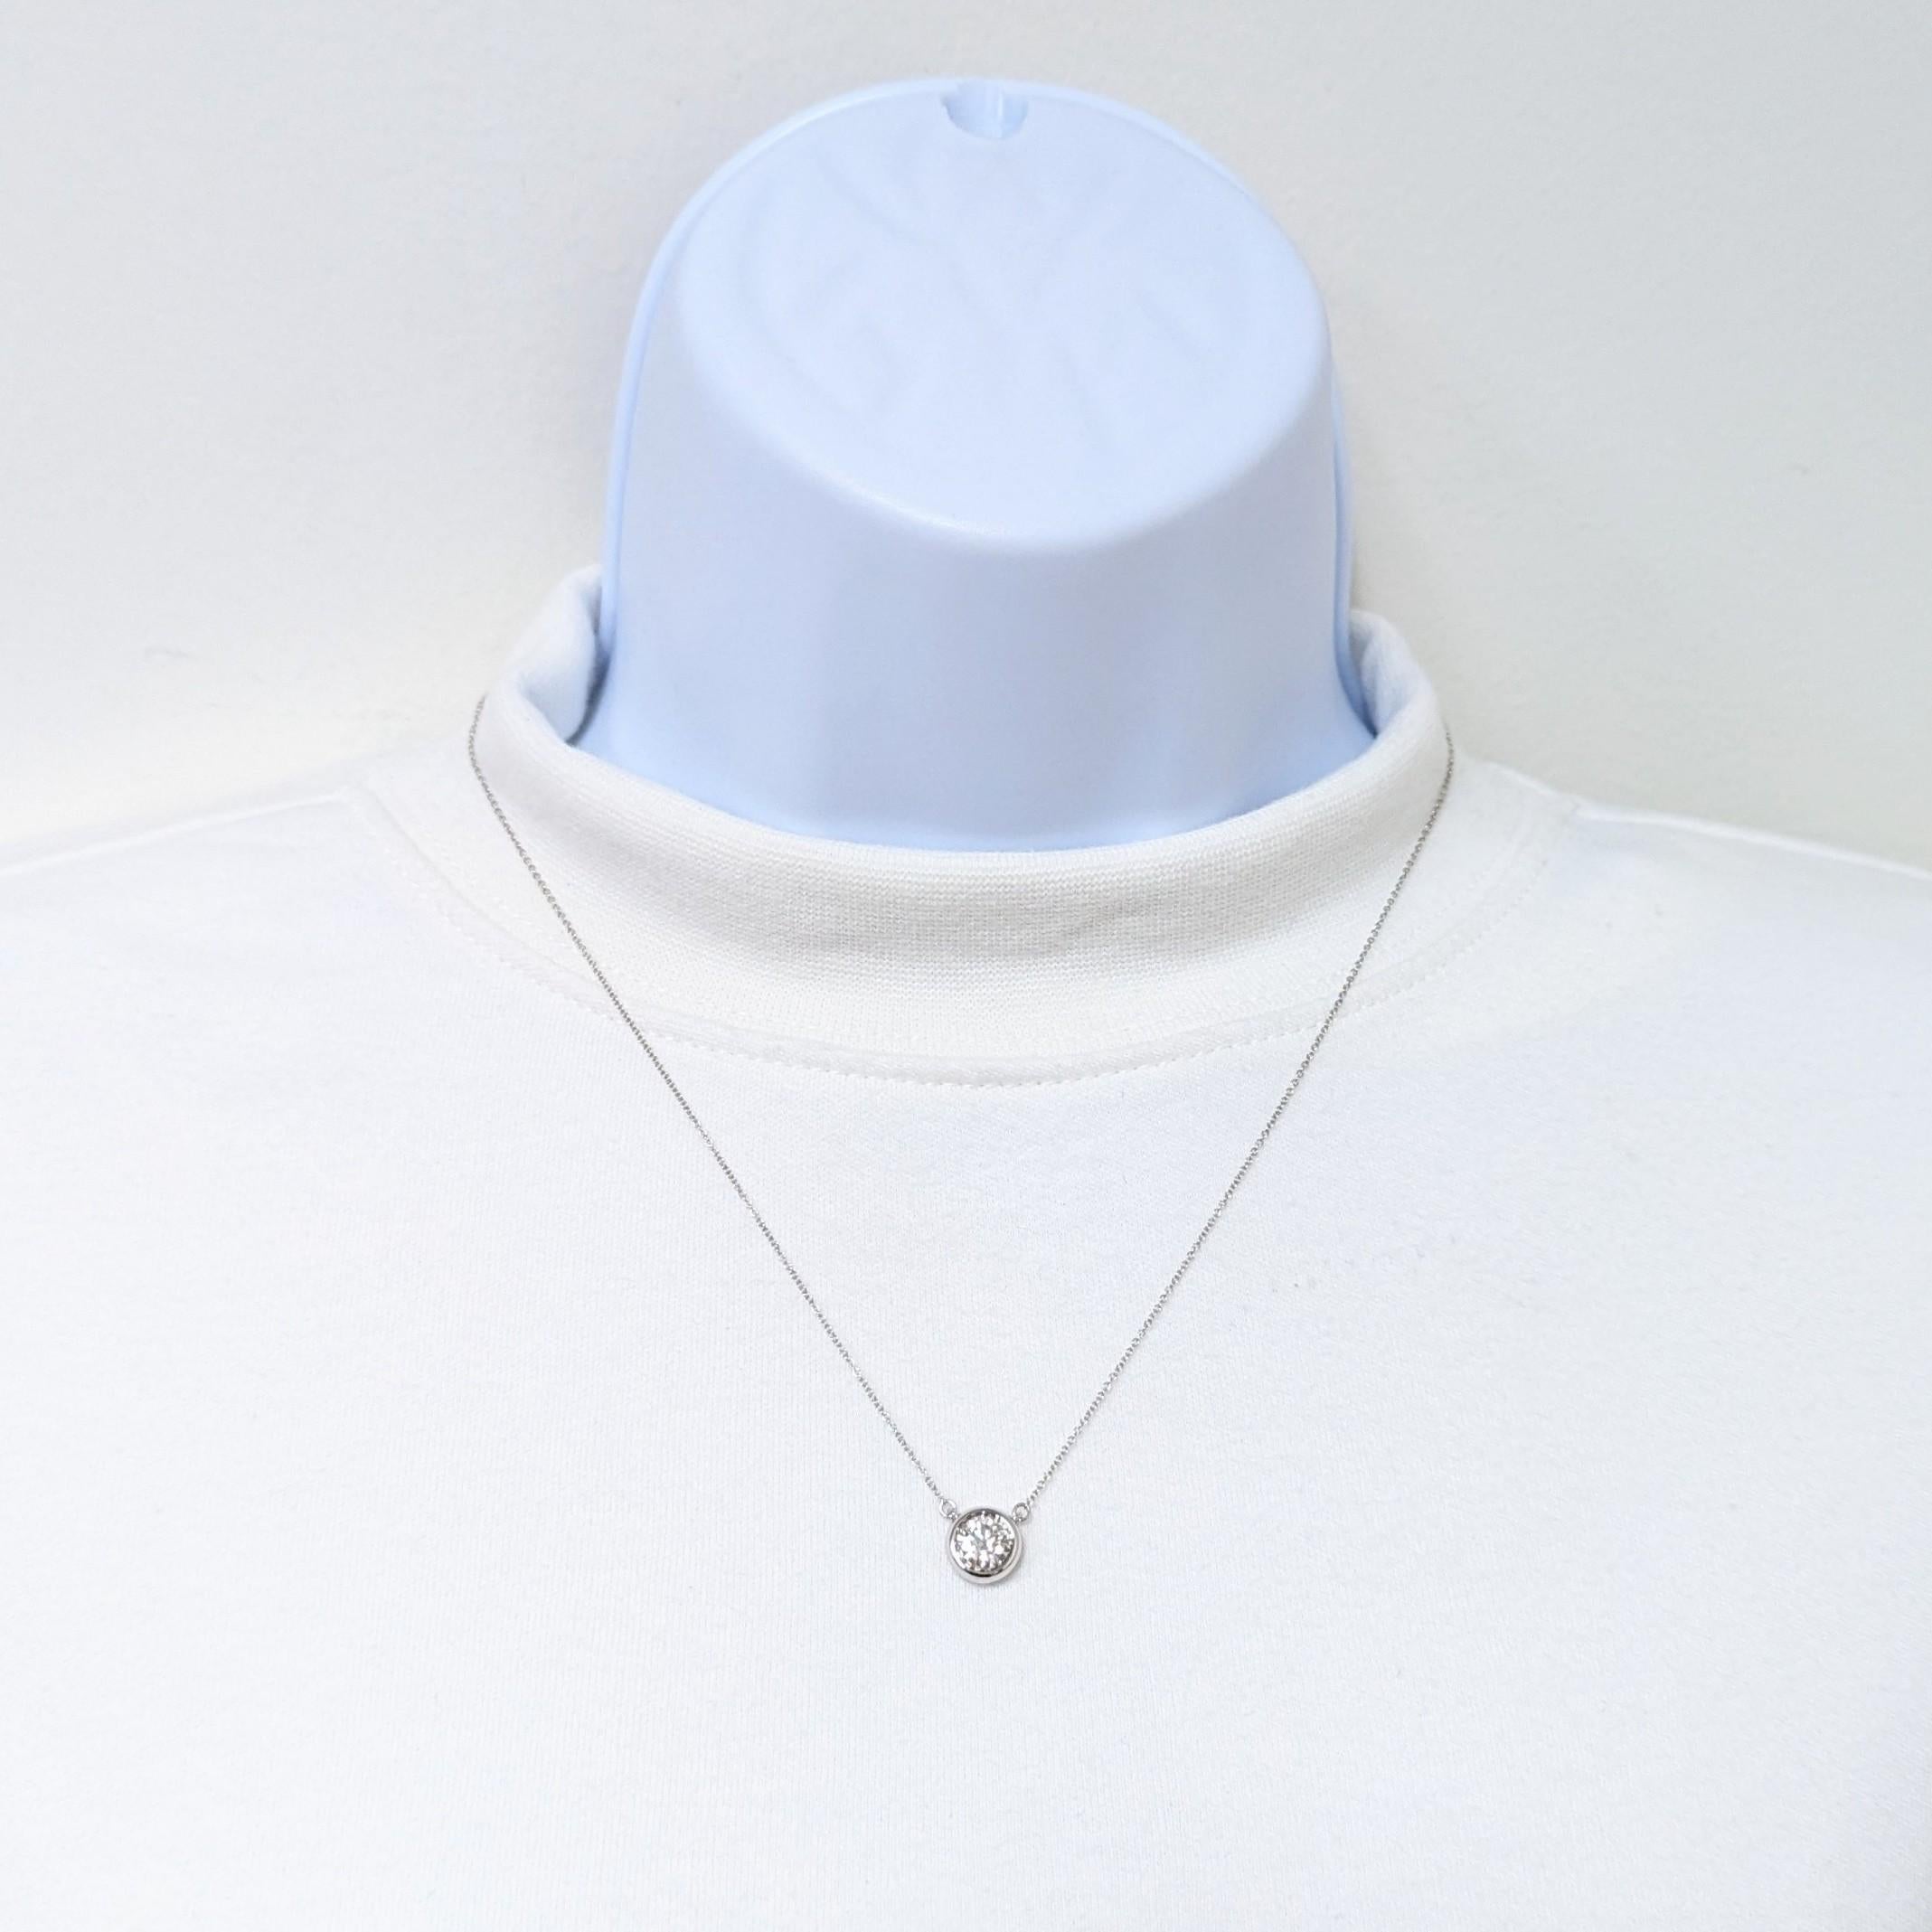 Beautiful 1.12 ct. white diamond round bezel pendant handmade in 14k white gold.  Length is 18